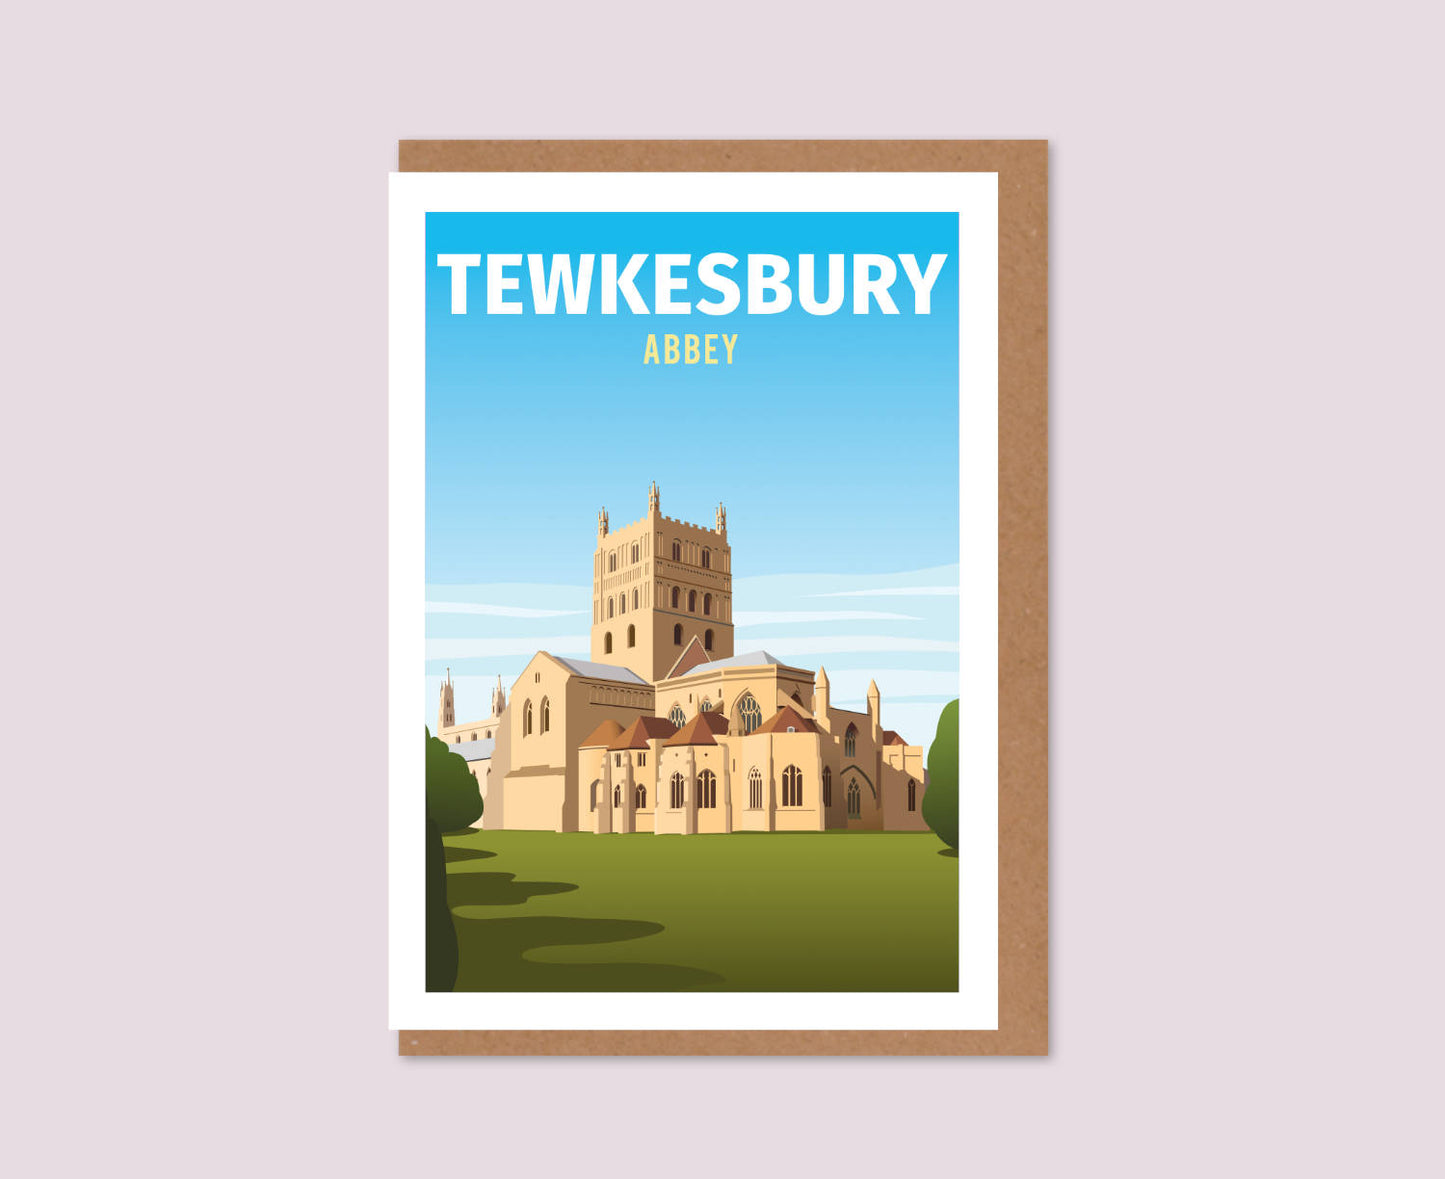 Tewkesbury Abbey greeting card design